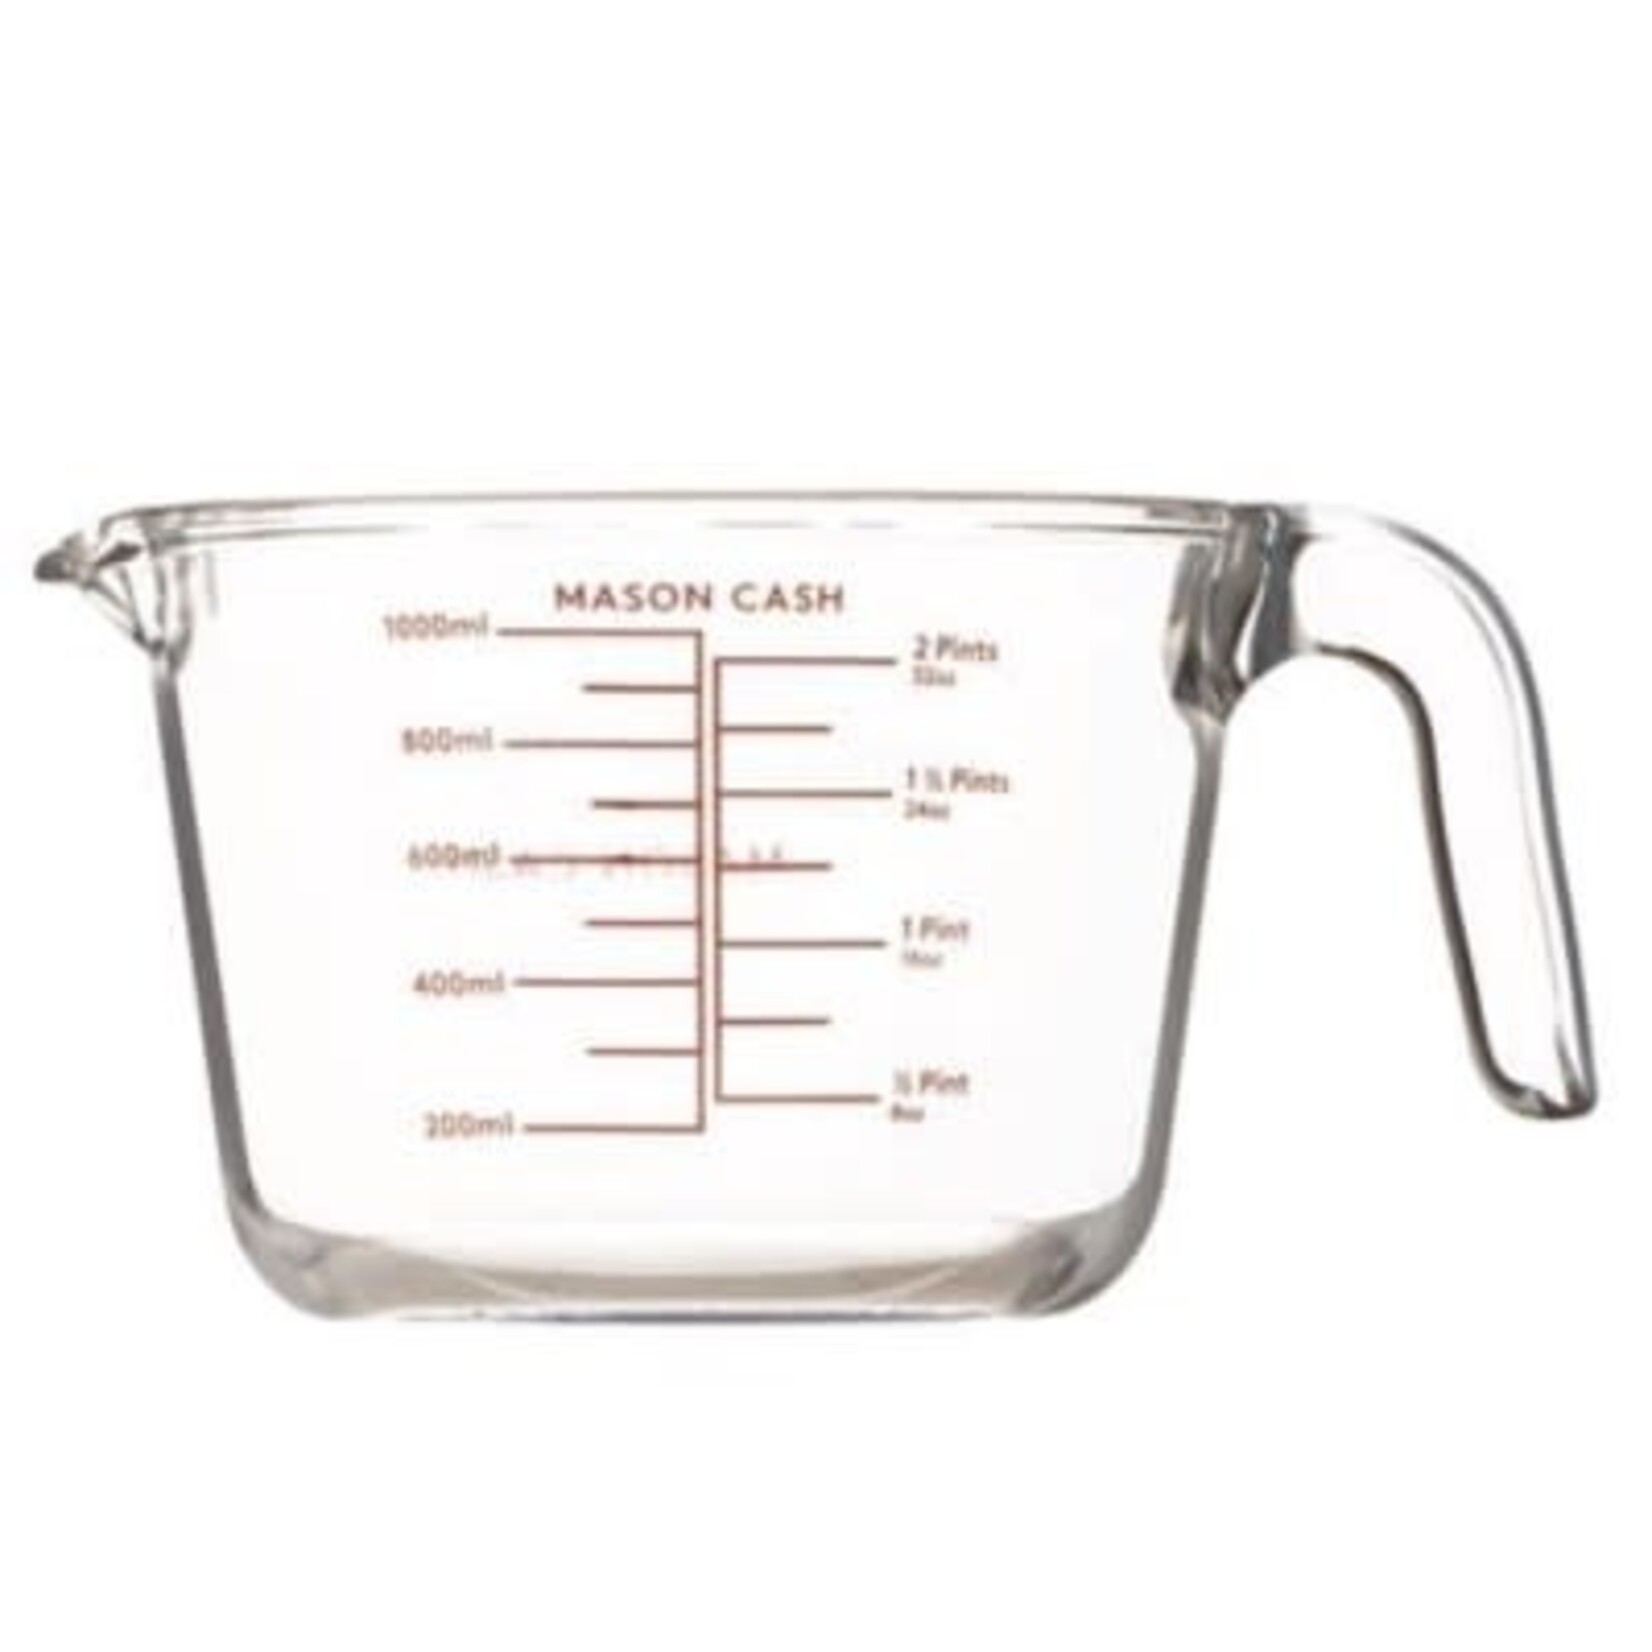 MASON CASH MASON CASH Measuring Jug - Large